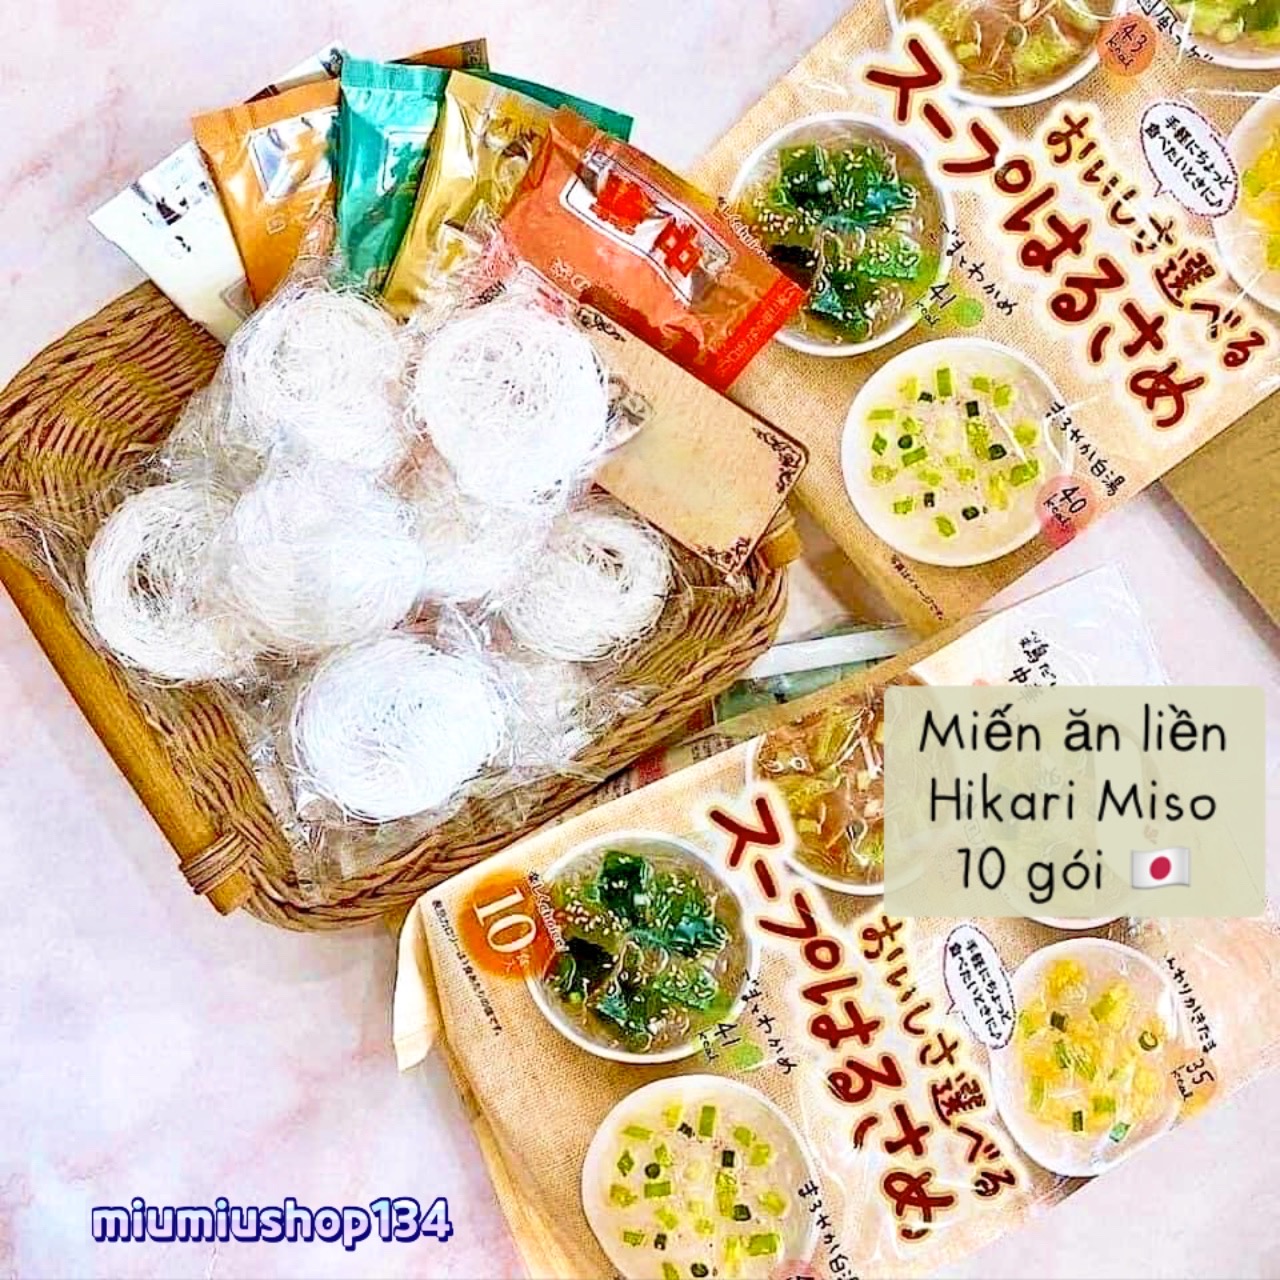 Miến ăn liền Hikari Miso 10 gói 🇯🇵